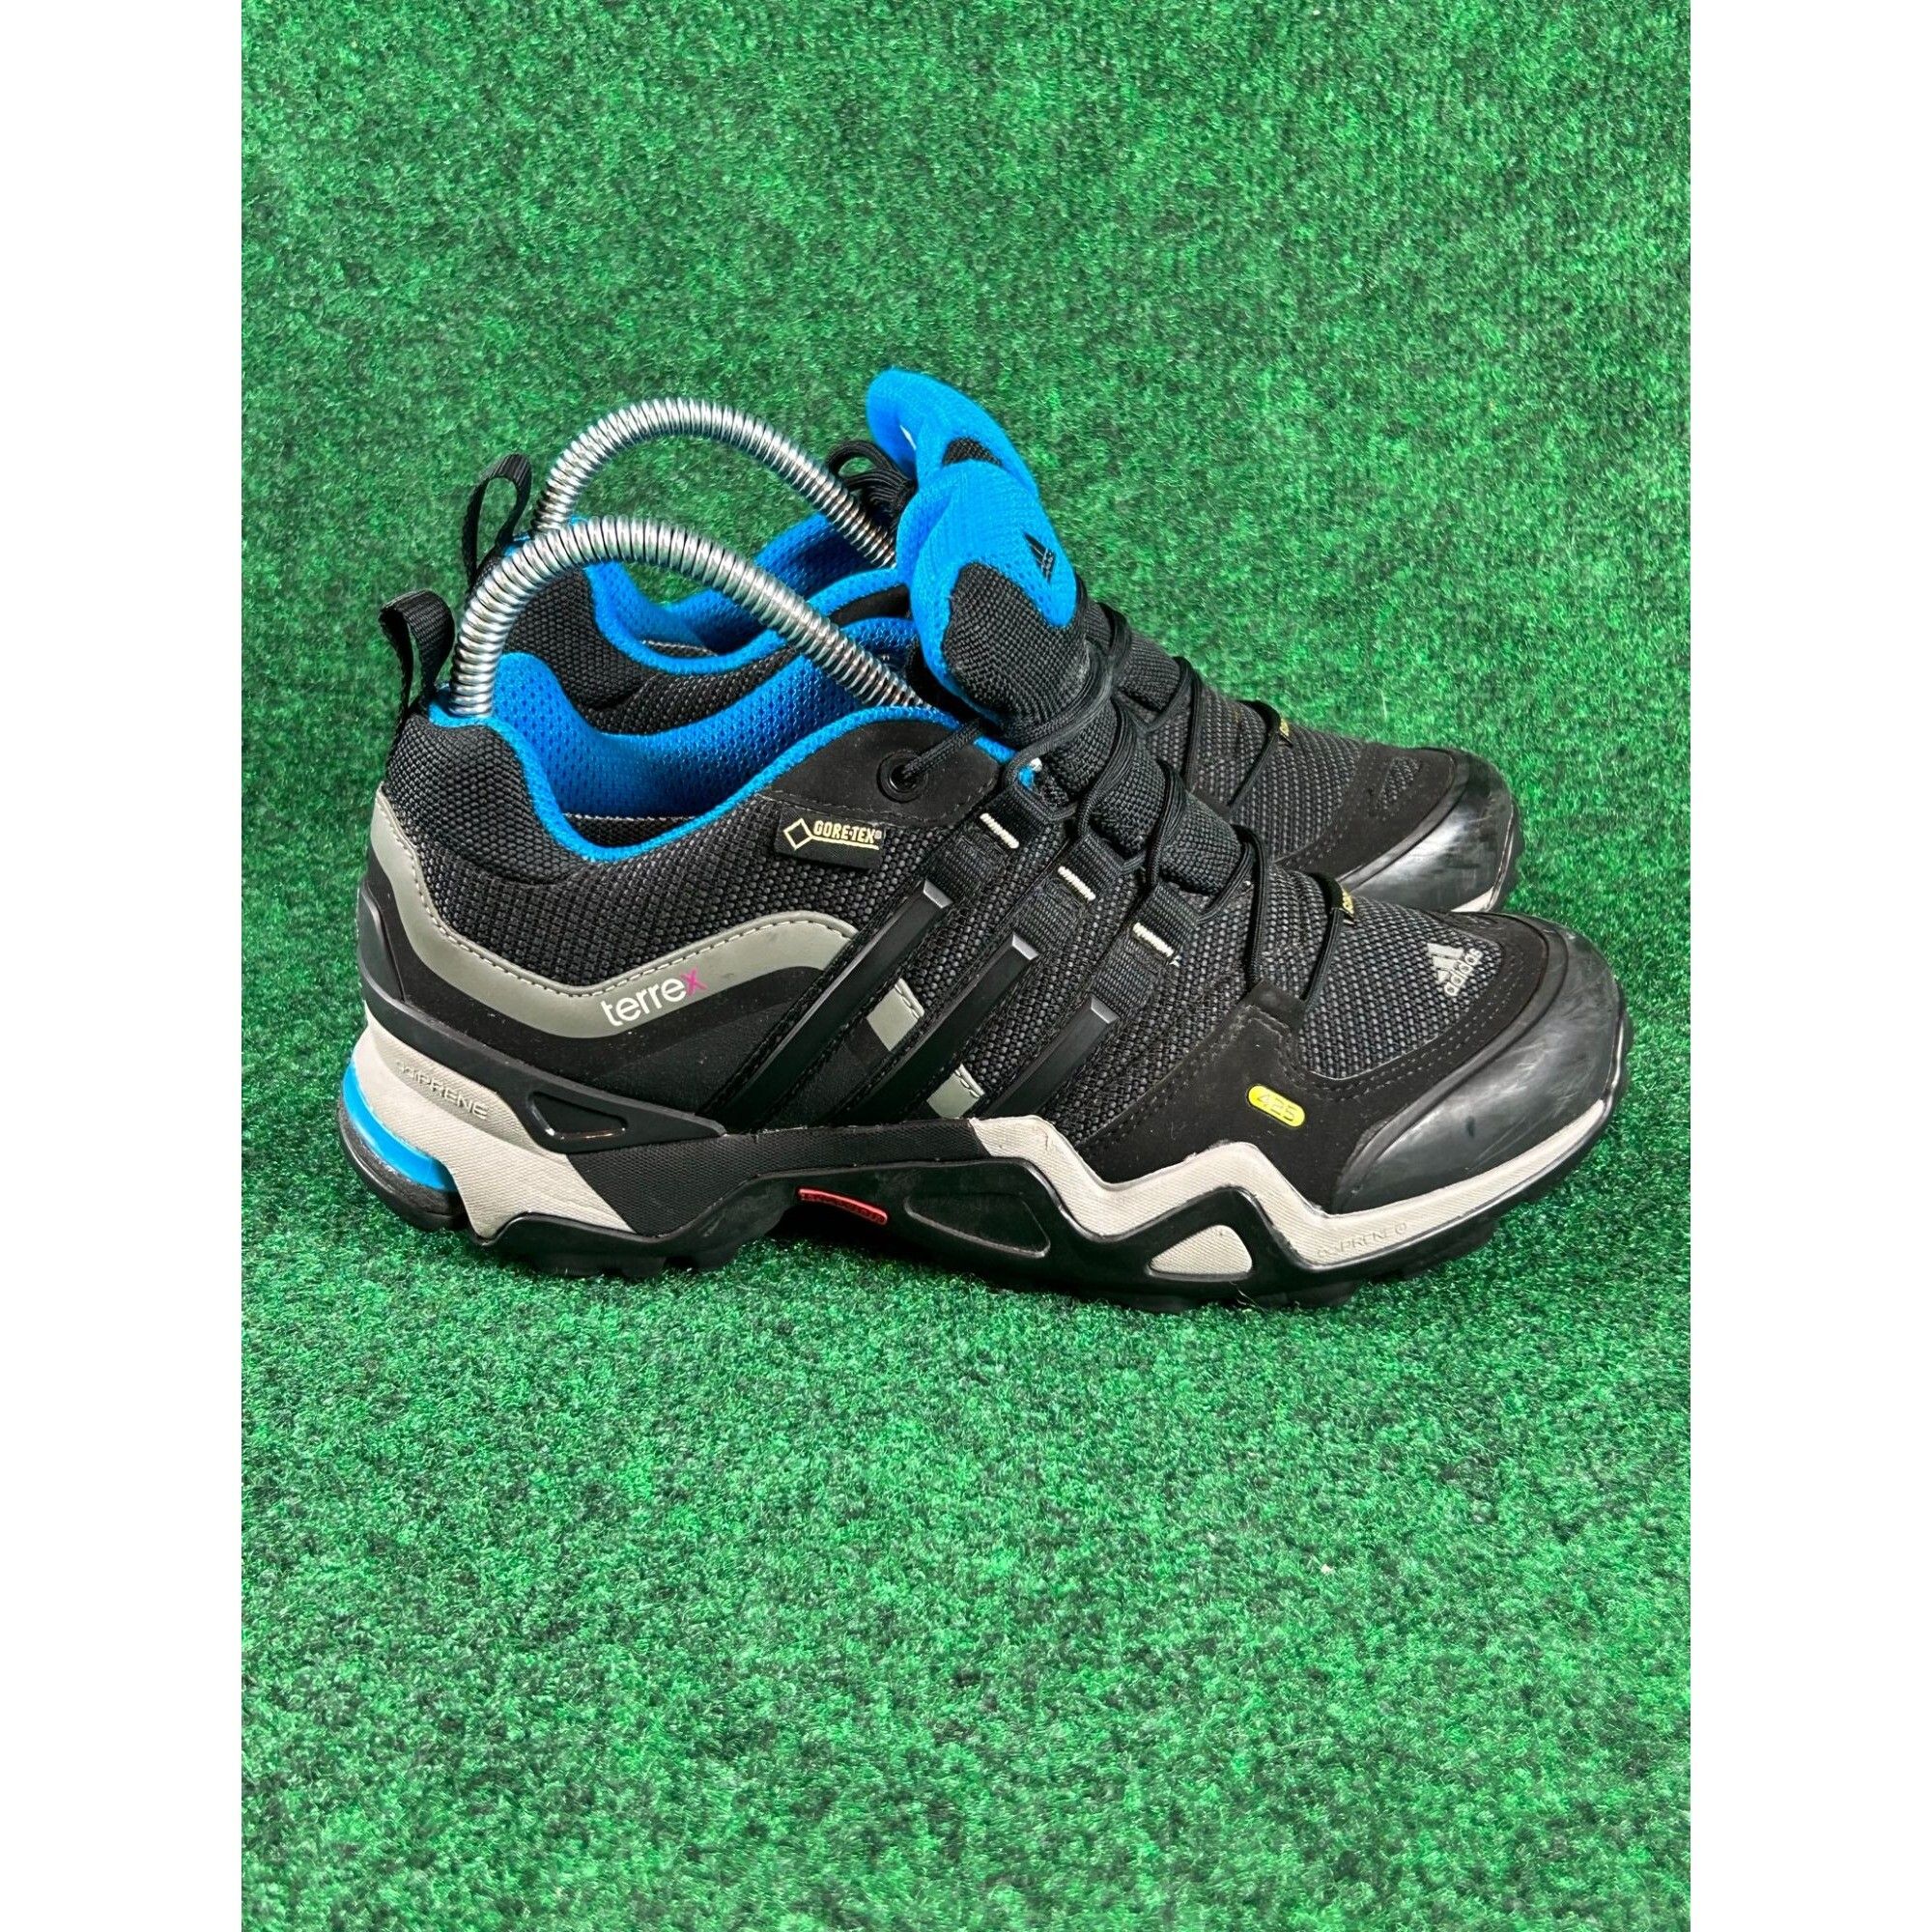 Adidas Adidas Terrex Fast X GTX Black & Blue Athletic Shoes Women 6 Size US 6 / IT 36 - 2 Preview